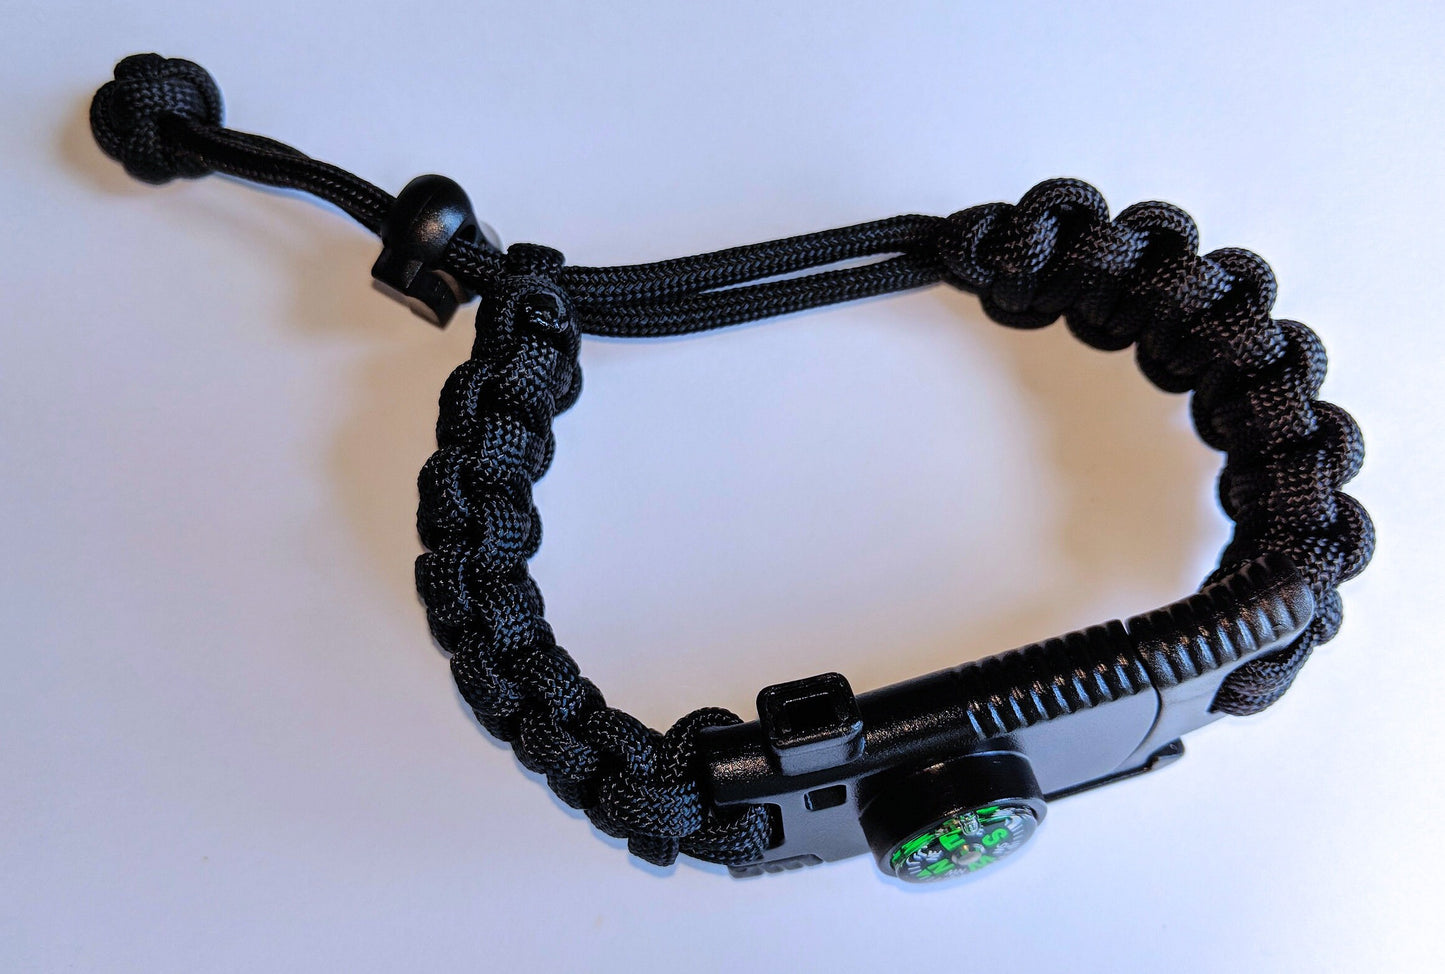 Paracord survival bracelet with tactical buckle adjustable